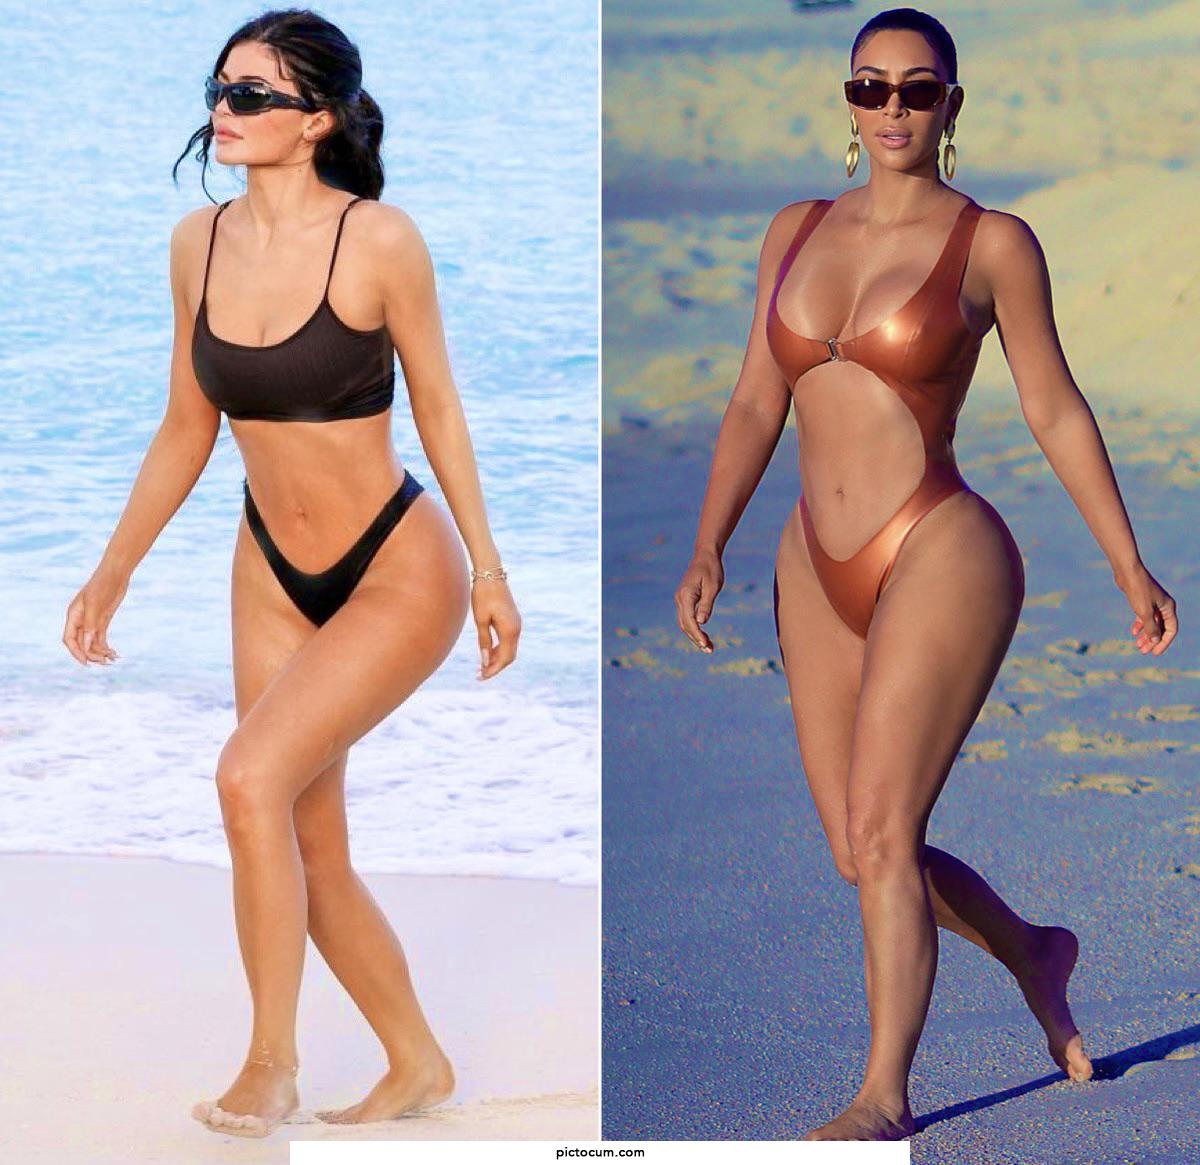 Kylie Jenner or Kim Kardashian